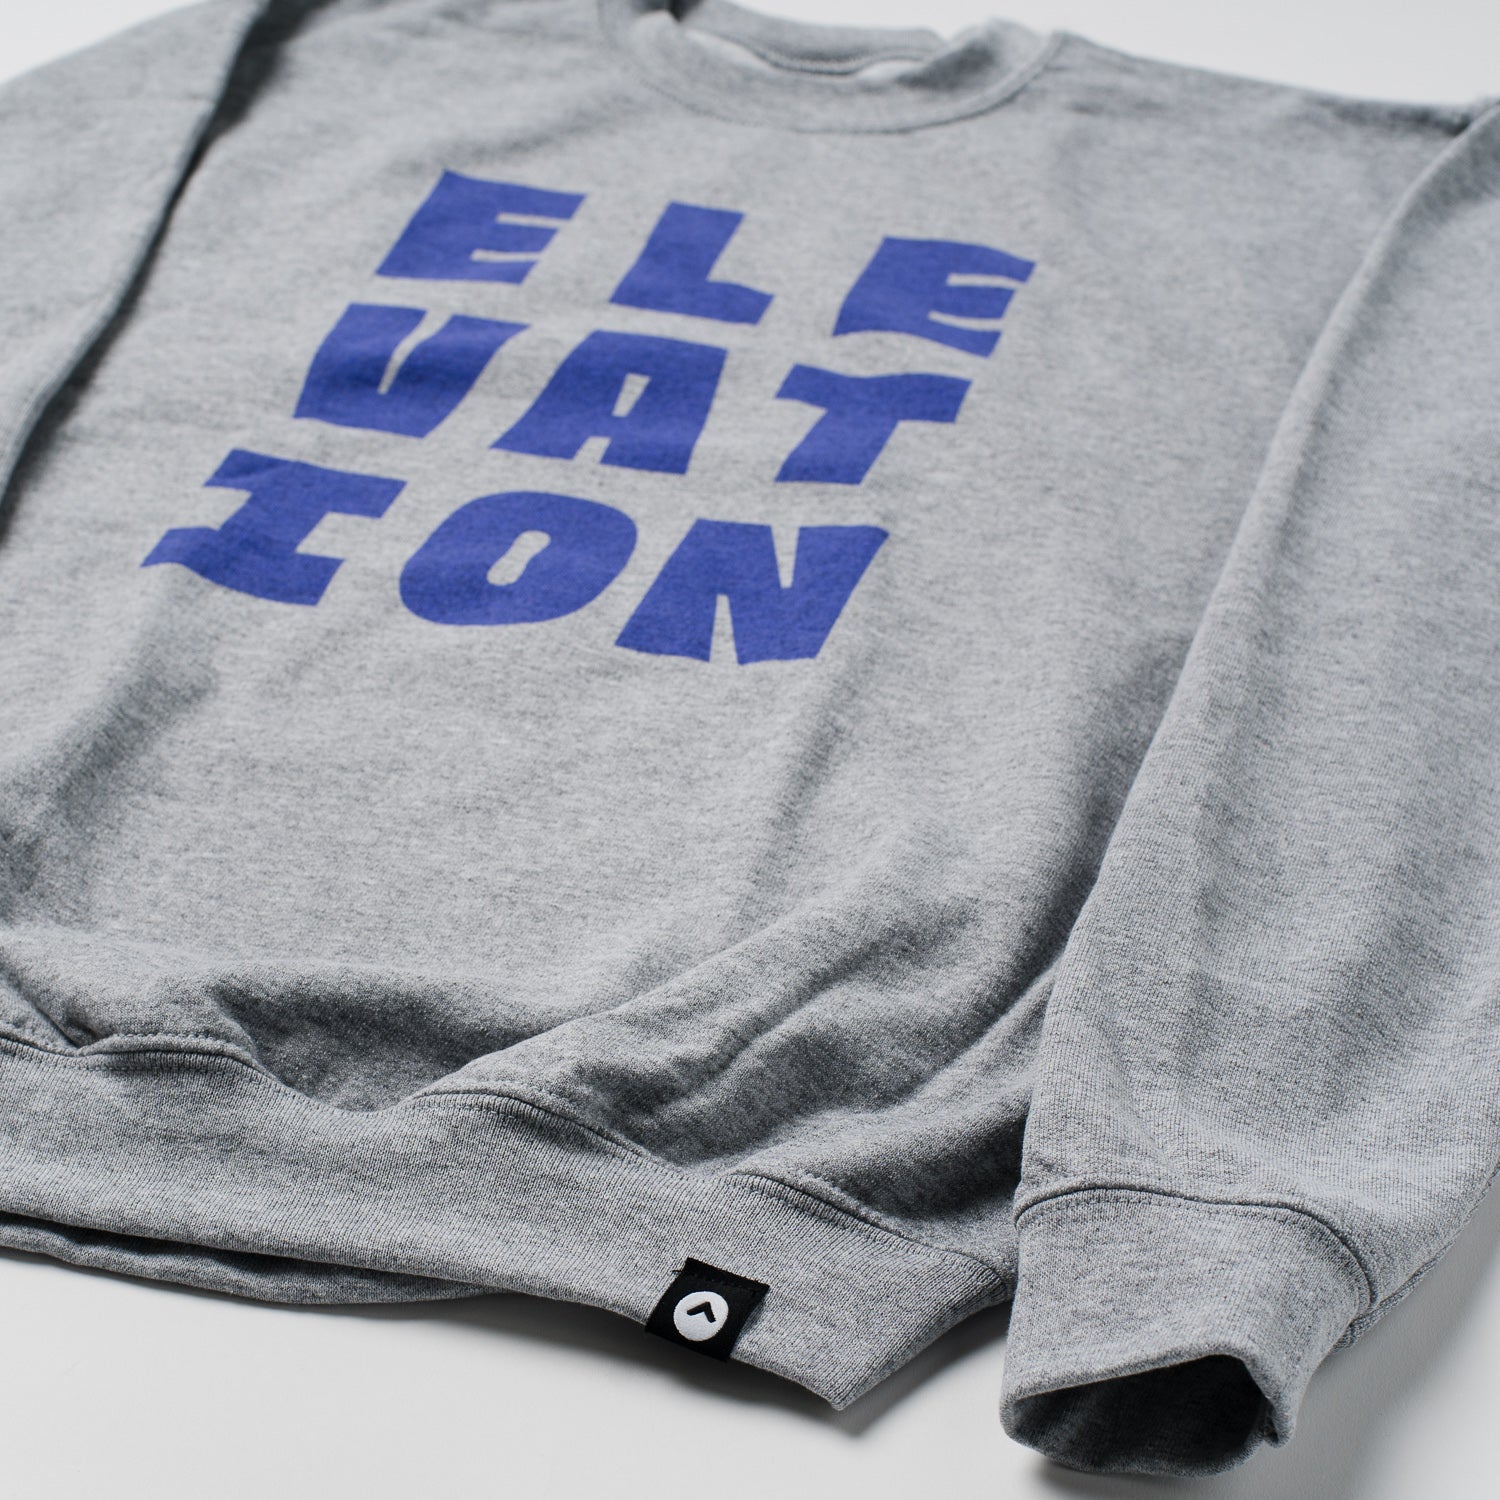 Kids 'Elevation' Sweatshirt